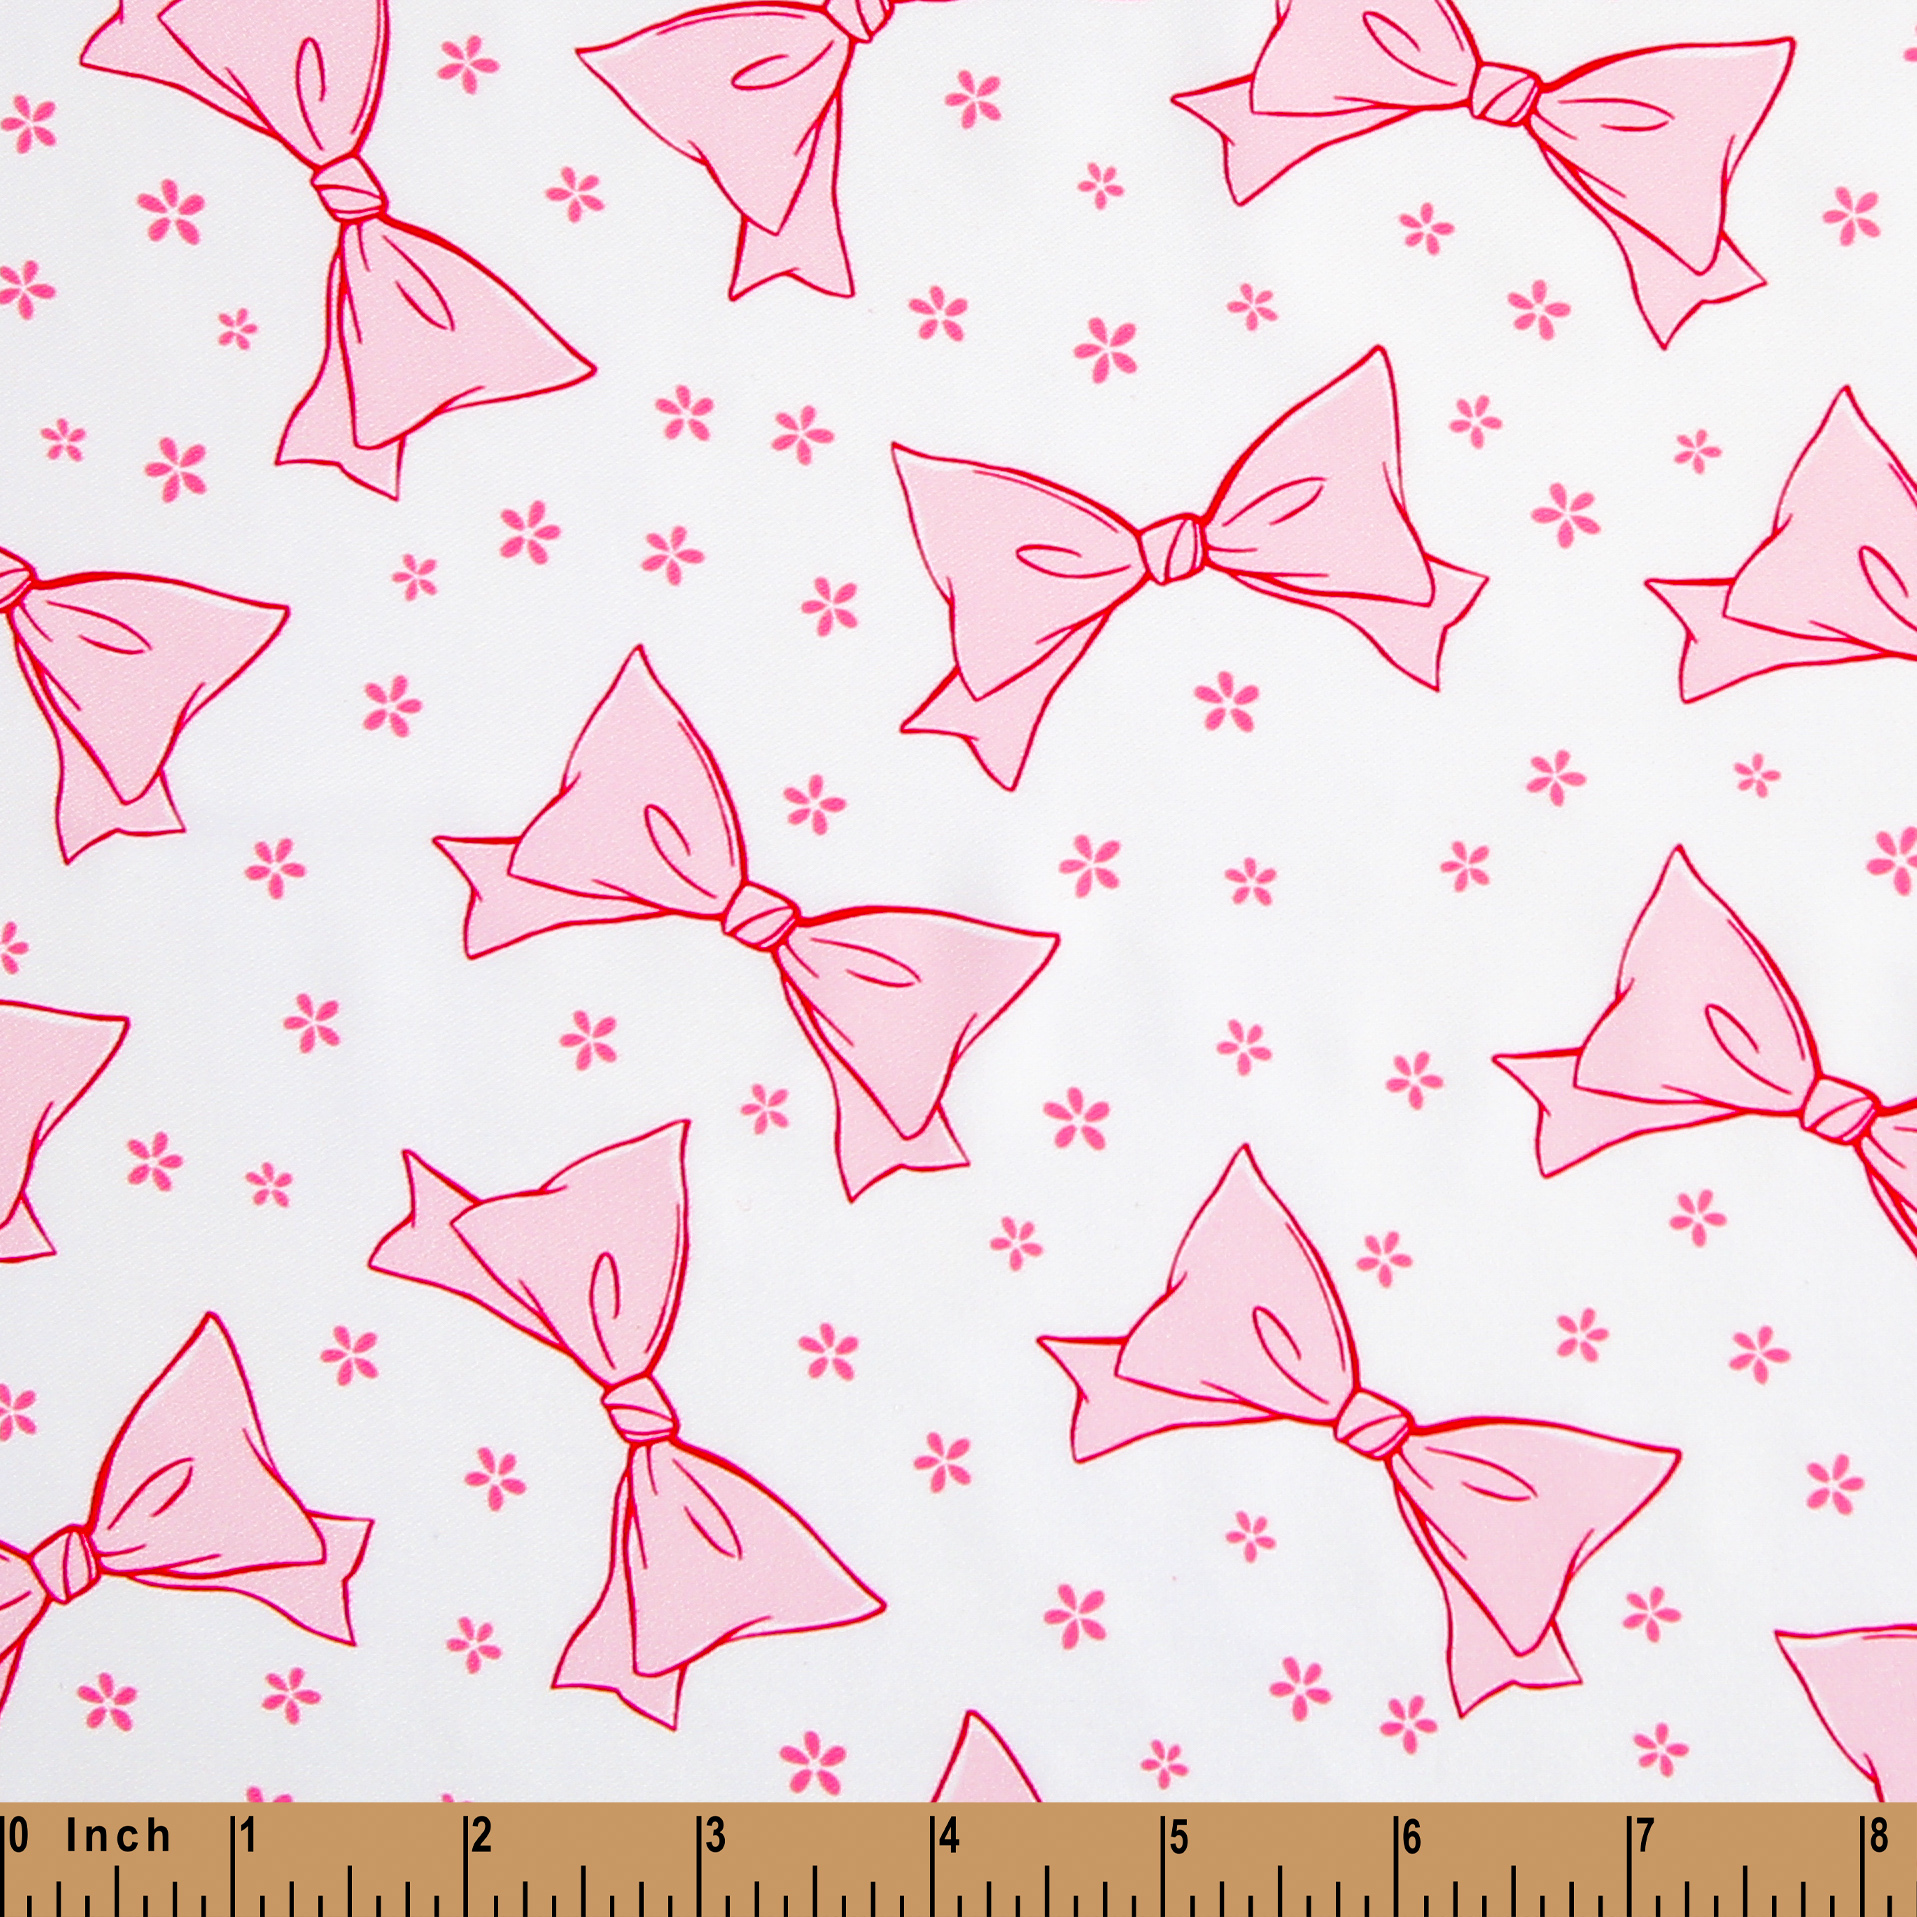 V6- Pink bows on white viscose fabric printed 4.0